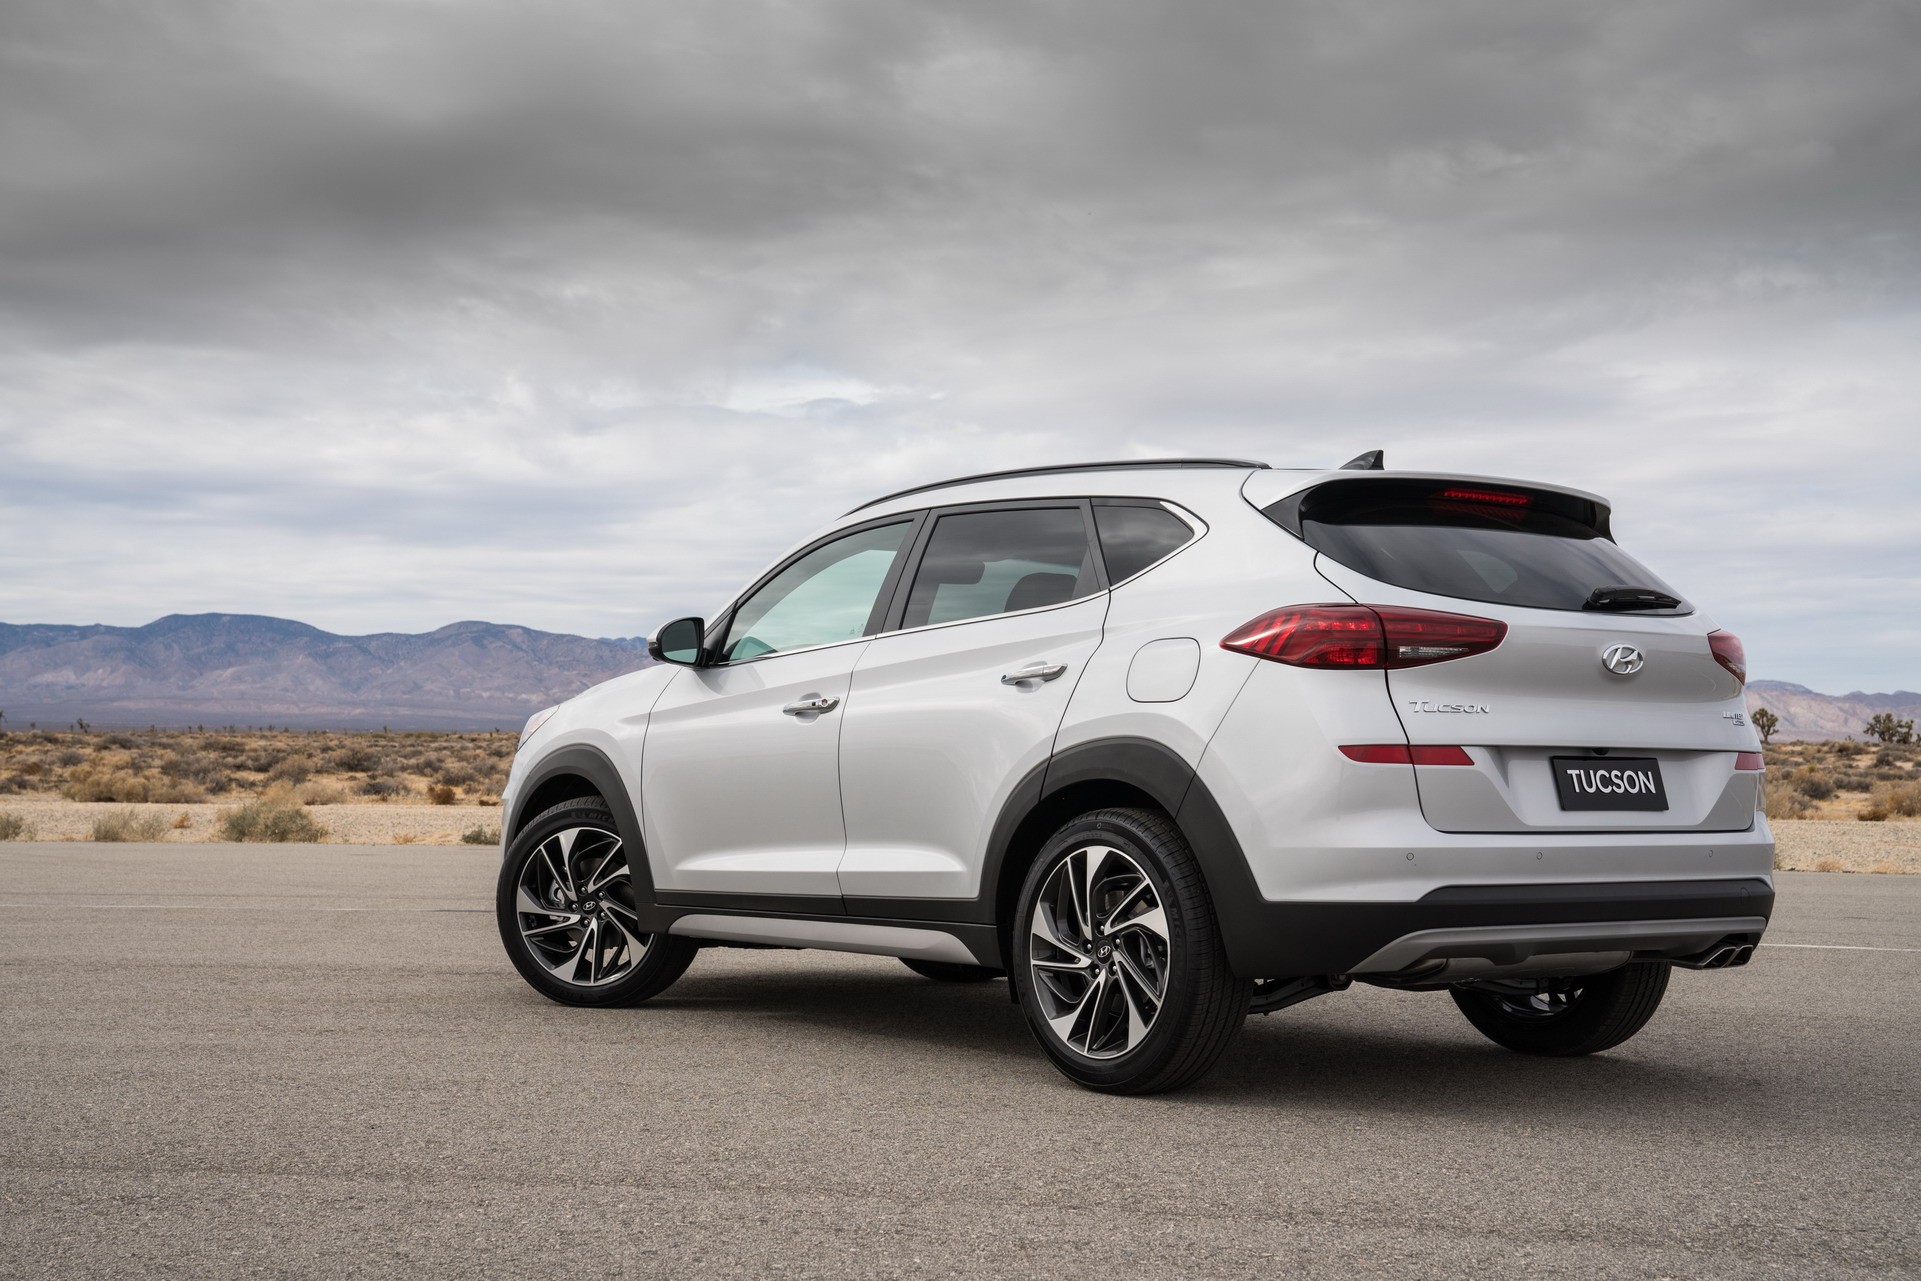 2019 Hyundai Tucson Pricing Announced, Starts At $23,200 - autoevolution